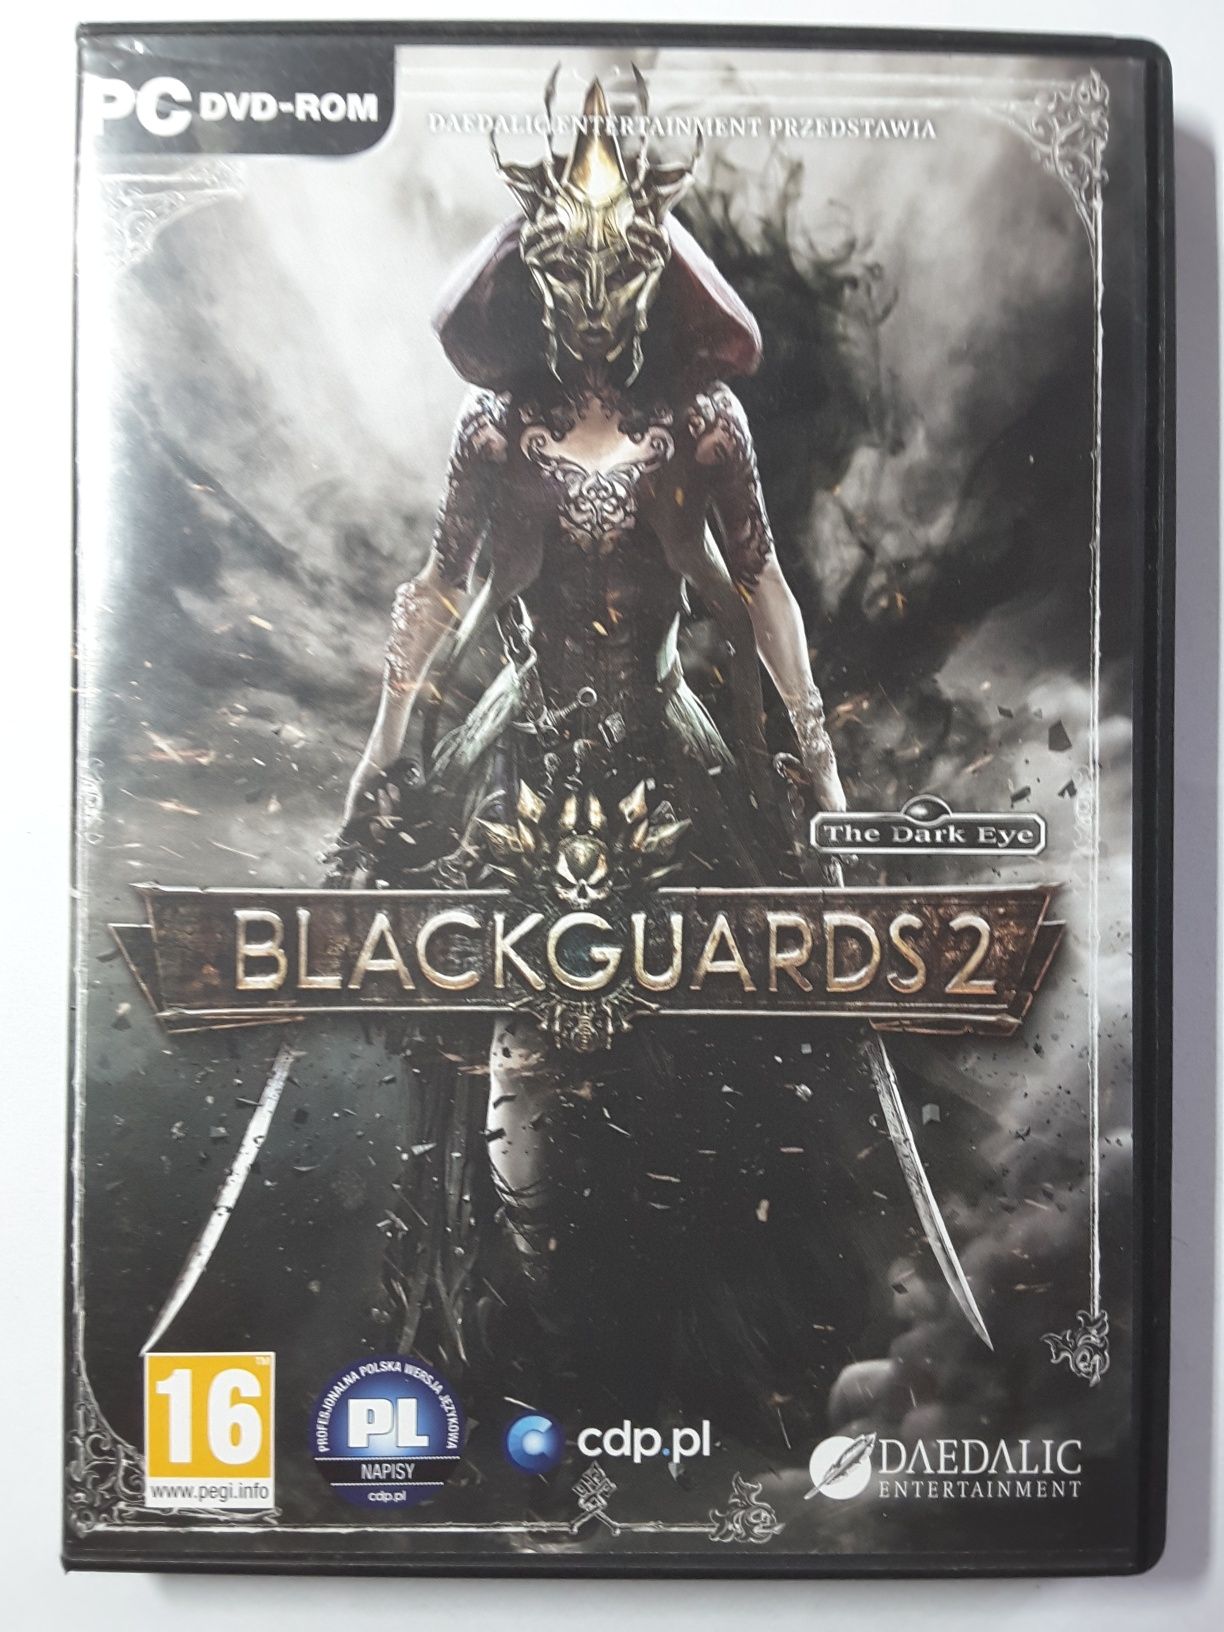 Blackguards 2 - PC DVD-ROM